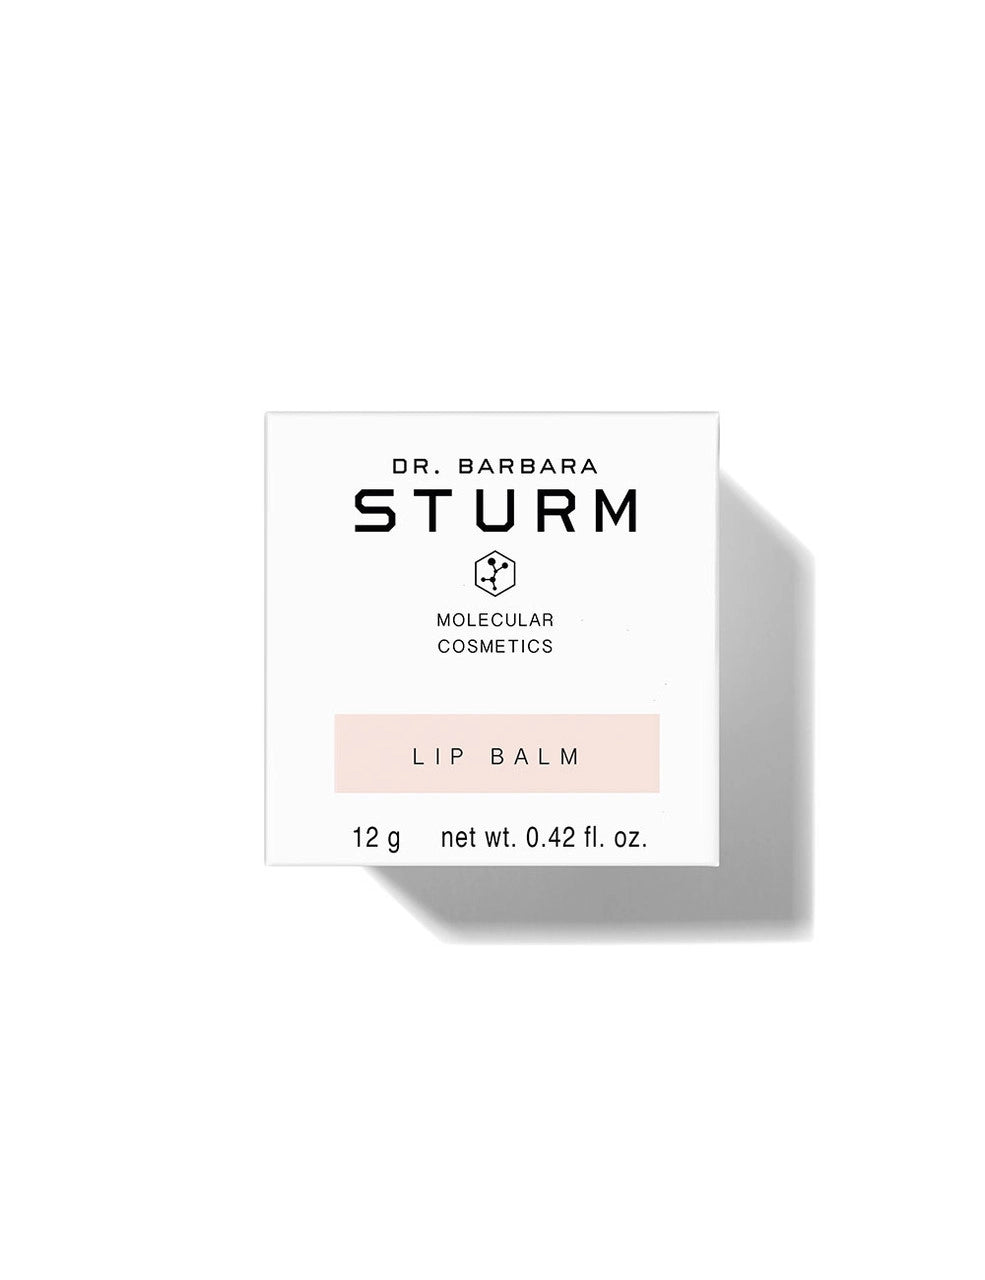 Dr. Sturm Lip Balm box